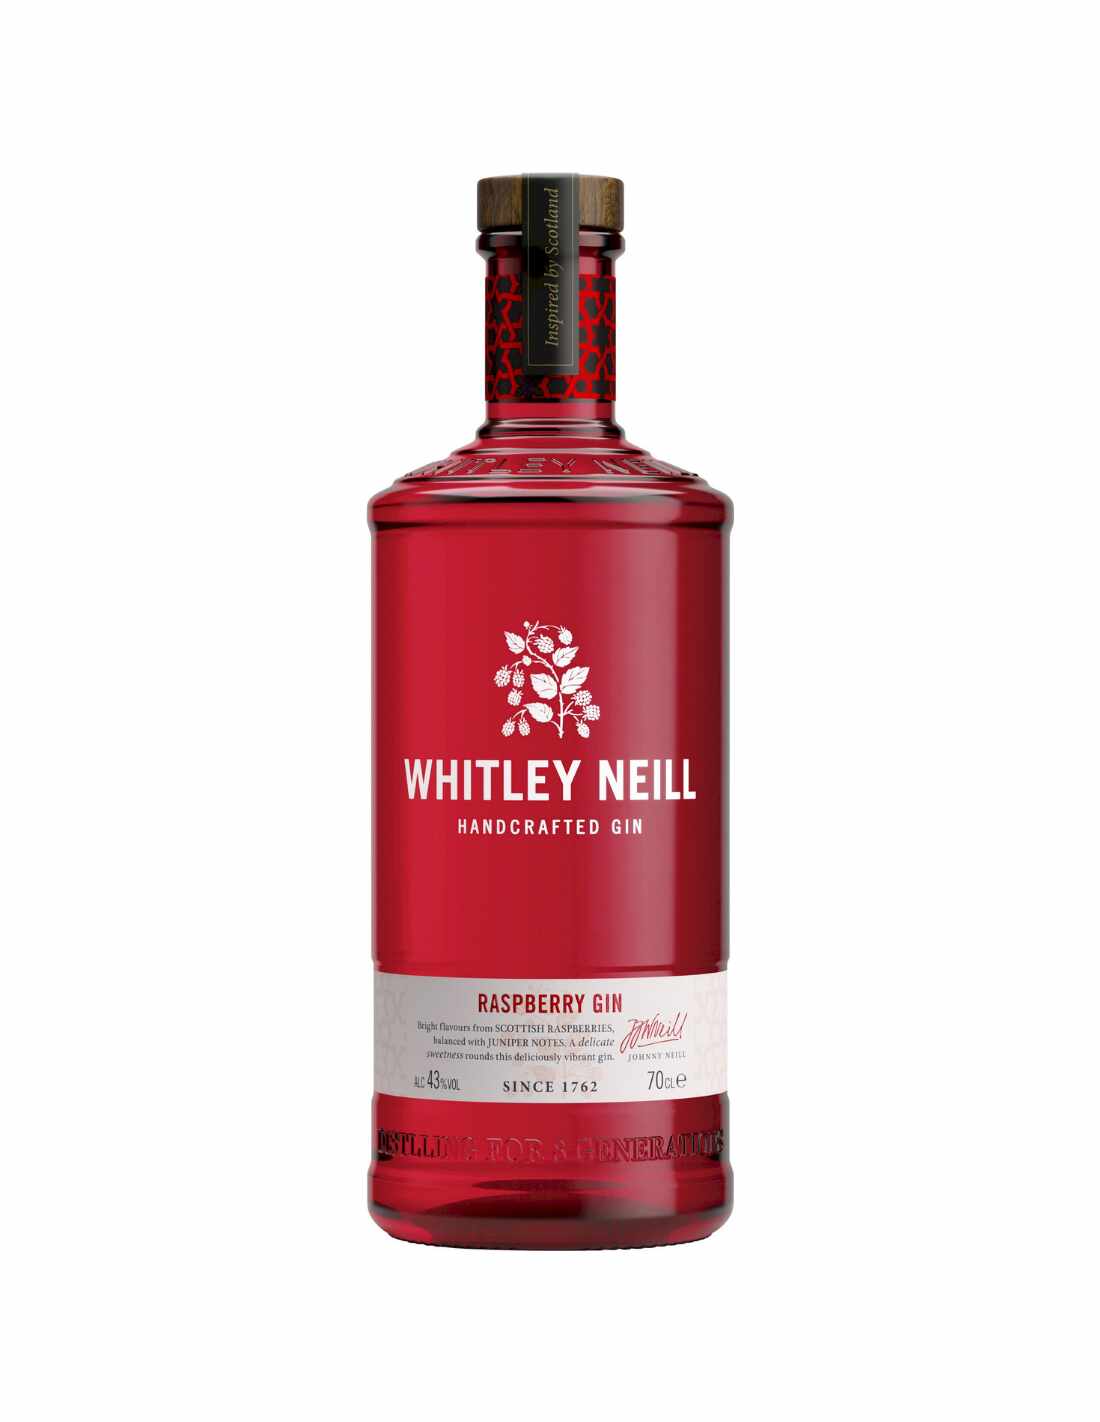 Gin Whitley Neill Raspberry, 43% alc., 0.7L, Anglia